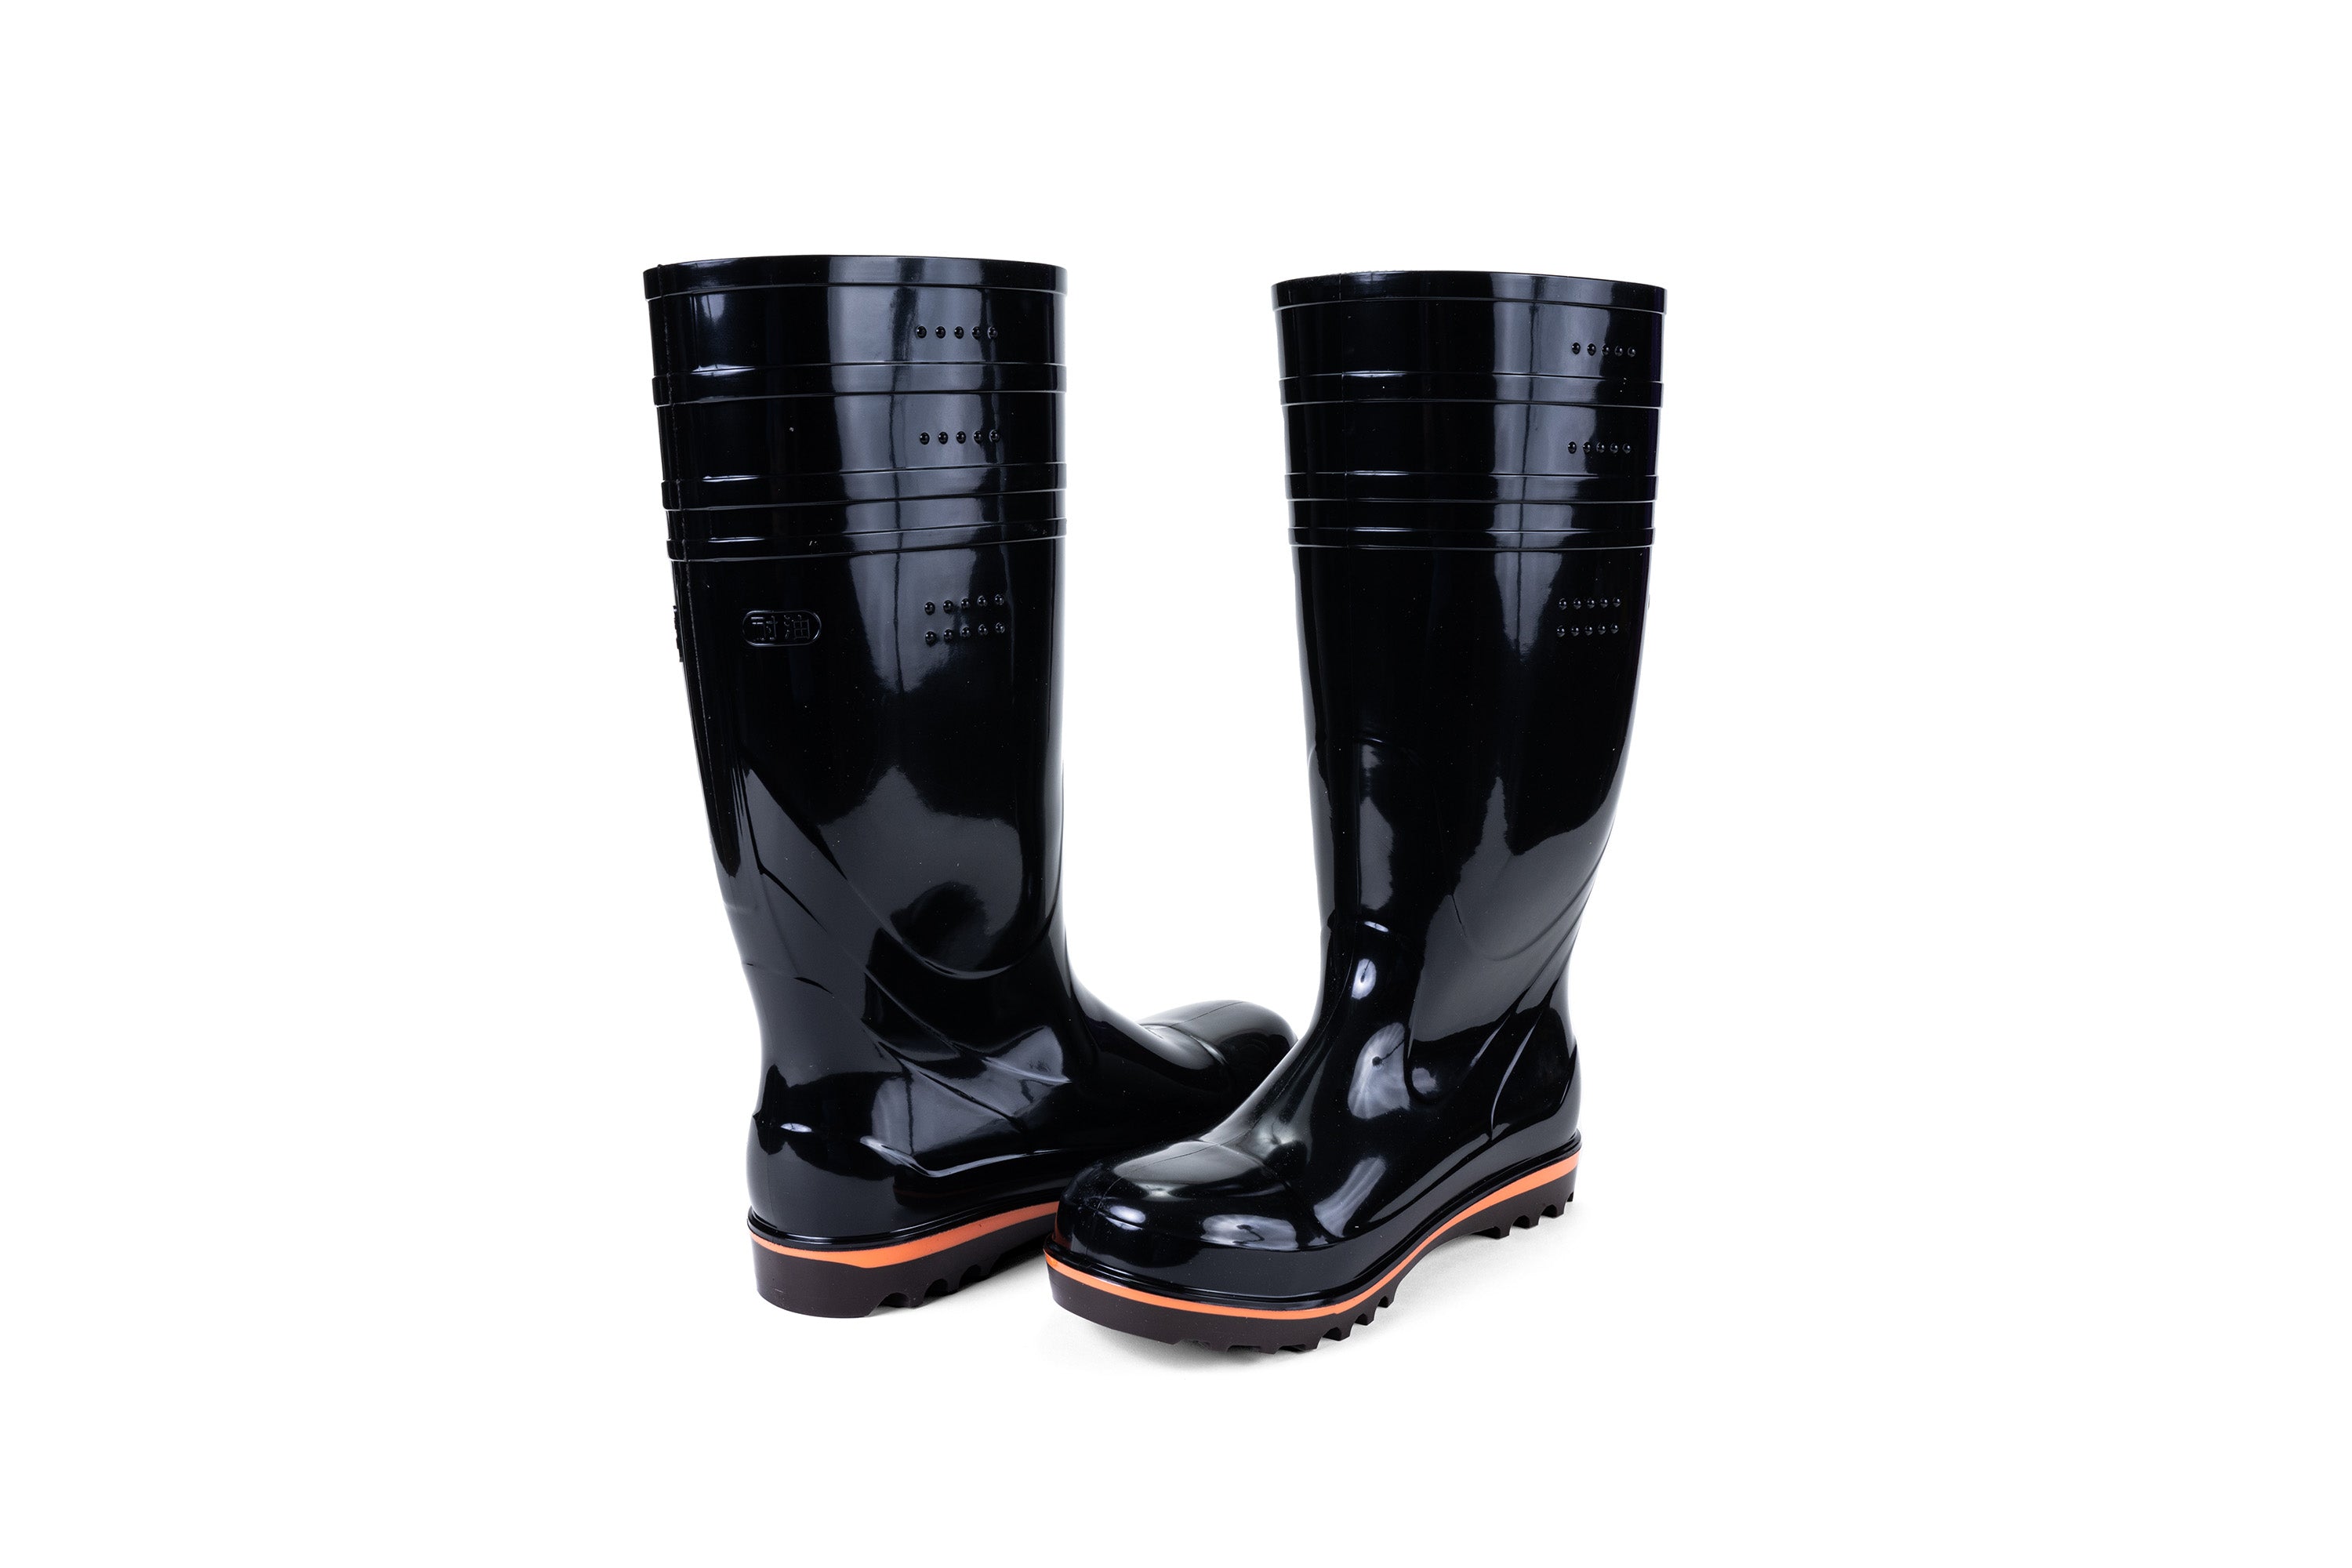 HB-500 Steel Toe Cap Rain Boots - Special Design for Kitchen (Japan Made with New Technology)-ZONA (KOHSHIN)-BK-JP/TW Size-1: 230-偉豐鞋 WELL SHOE HK-Well Shoe-偉豐鞋-偉豐網-荃灣鞋店-Functional shoes-Hong Kong Tsuen Wan Shoe Store-Tai Wan Shoe-Japan Shoe-高品質功能鞋-台灣進口鞋-日本進口鞋-High-quality shoes-鞋類配件-荃灣進口鞋-香港鞋店-優質鞋類產品-水靴-帆布鞋-廚師鞋-香港鞋品牌-Hong Kong Shoes brand-長者鞋-Hong Kong Rain Boots-Kitchen shoes-Cruthes-Slipper-Well Shoe Hong Kong-Anello-Arriba-休閒鞋-舒適鞋-健康鞋-皮鞋-Healthy shoes-Leather shoes-Hiking shoes